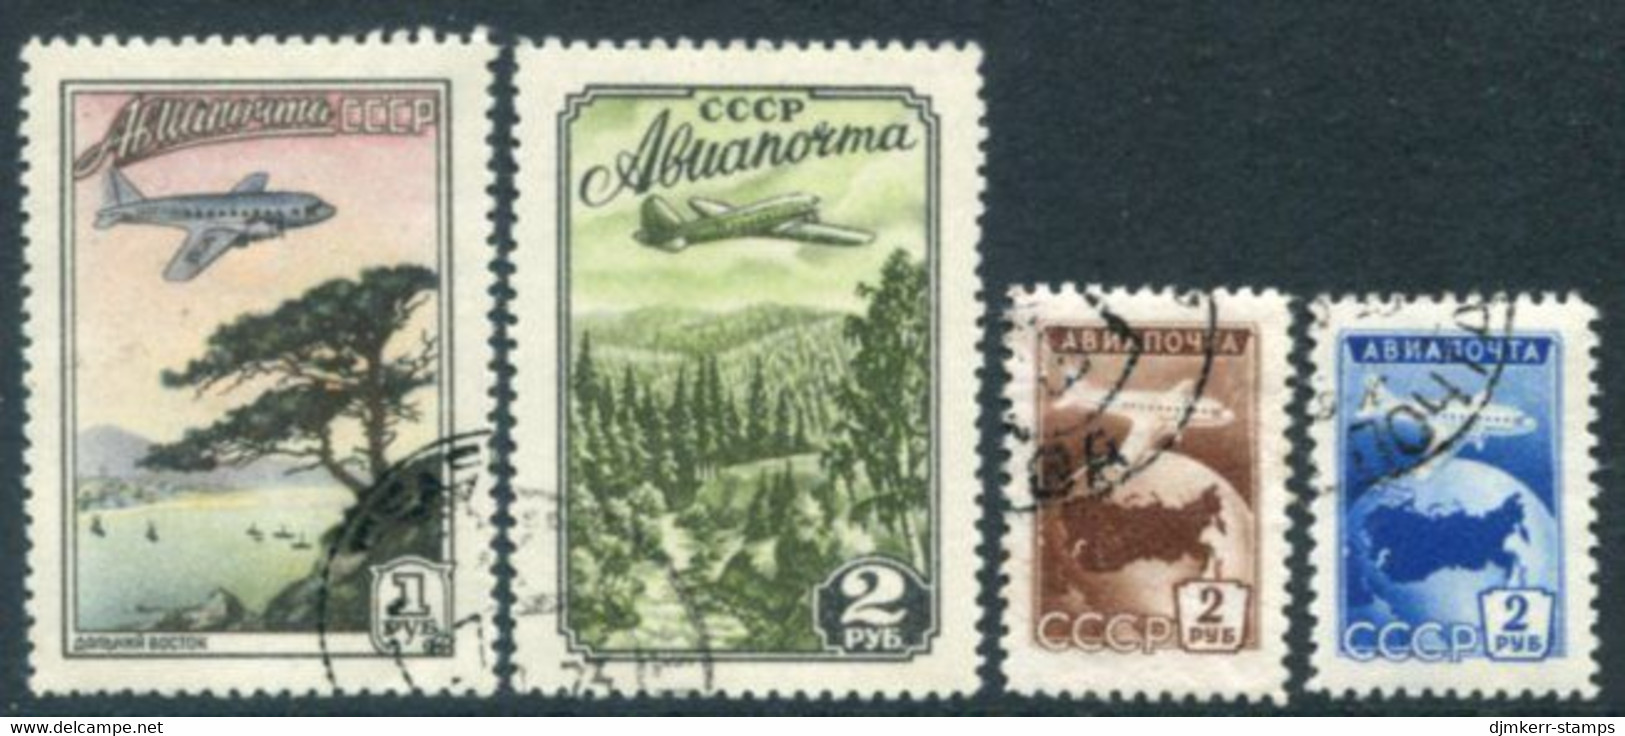 SOVIET UNION 1955 Airmail Definitive Used.  Michel 1749A,1760-62 - Gebruikt